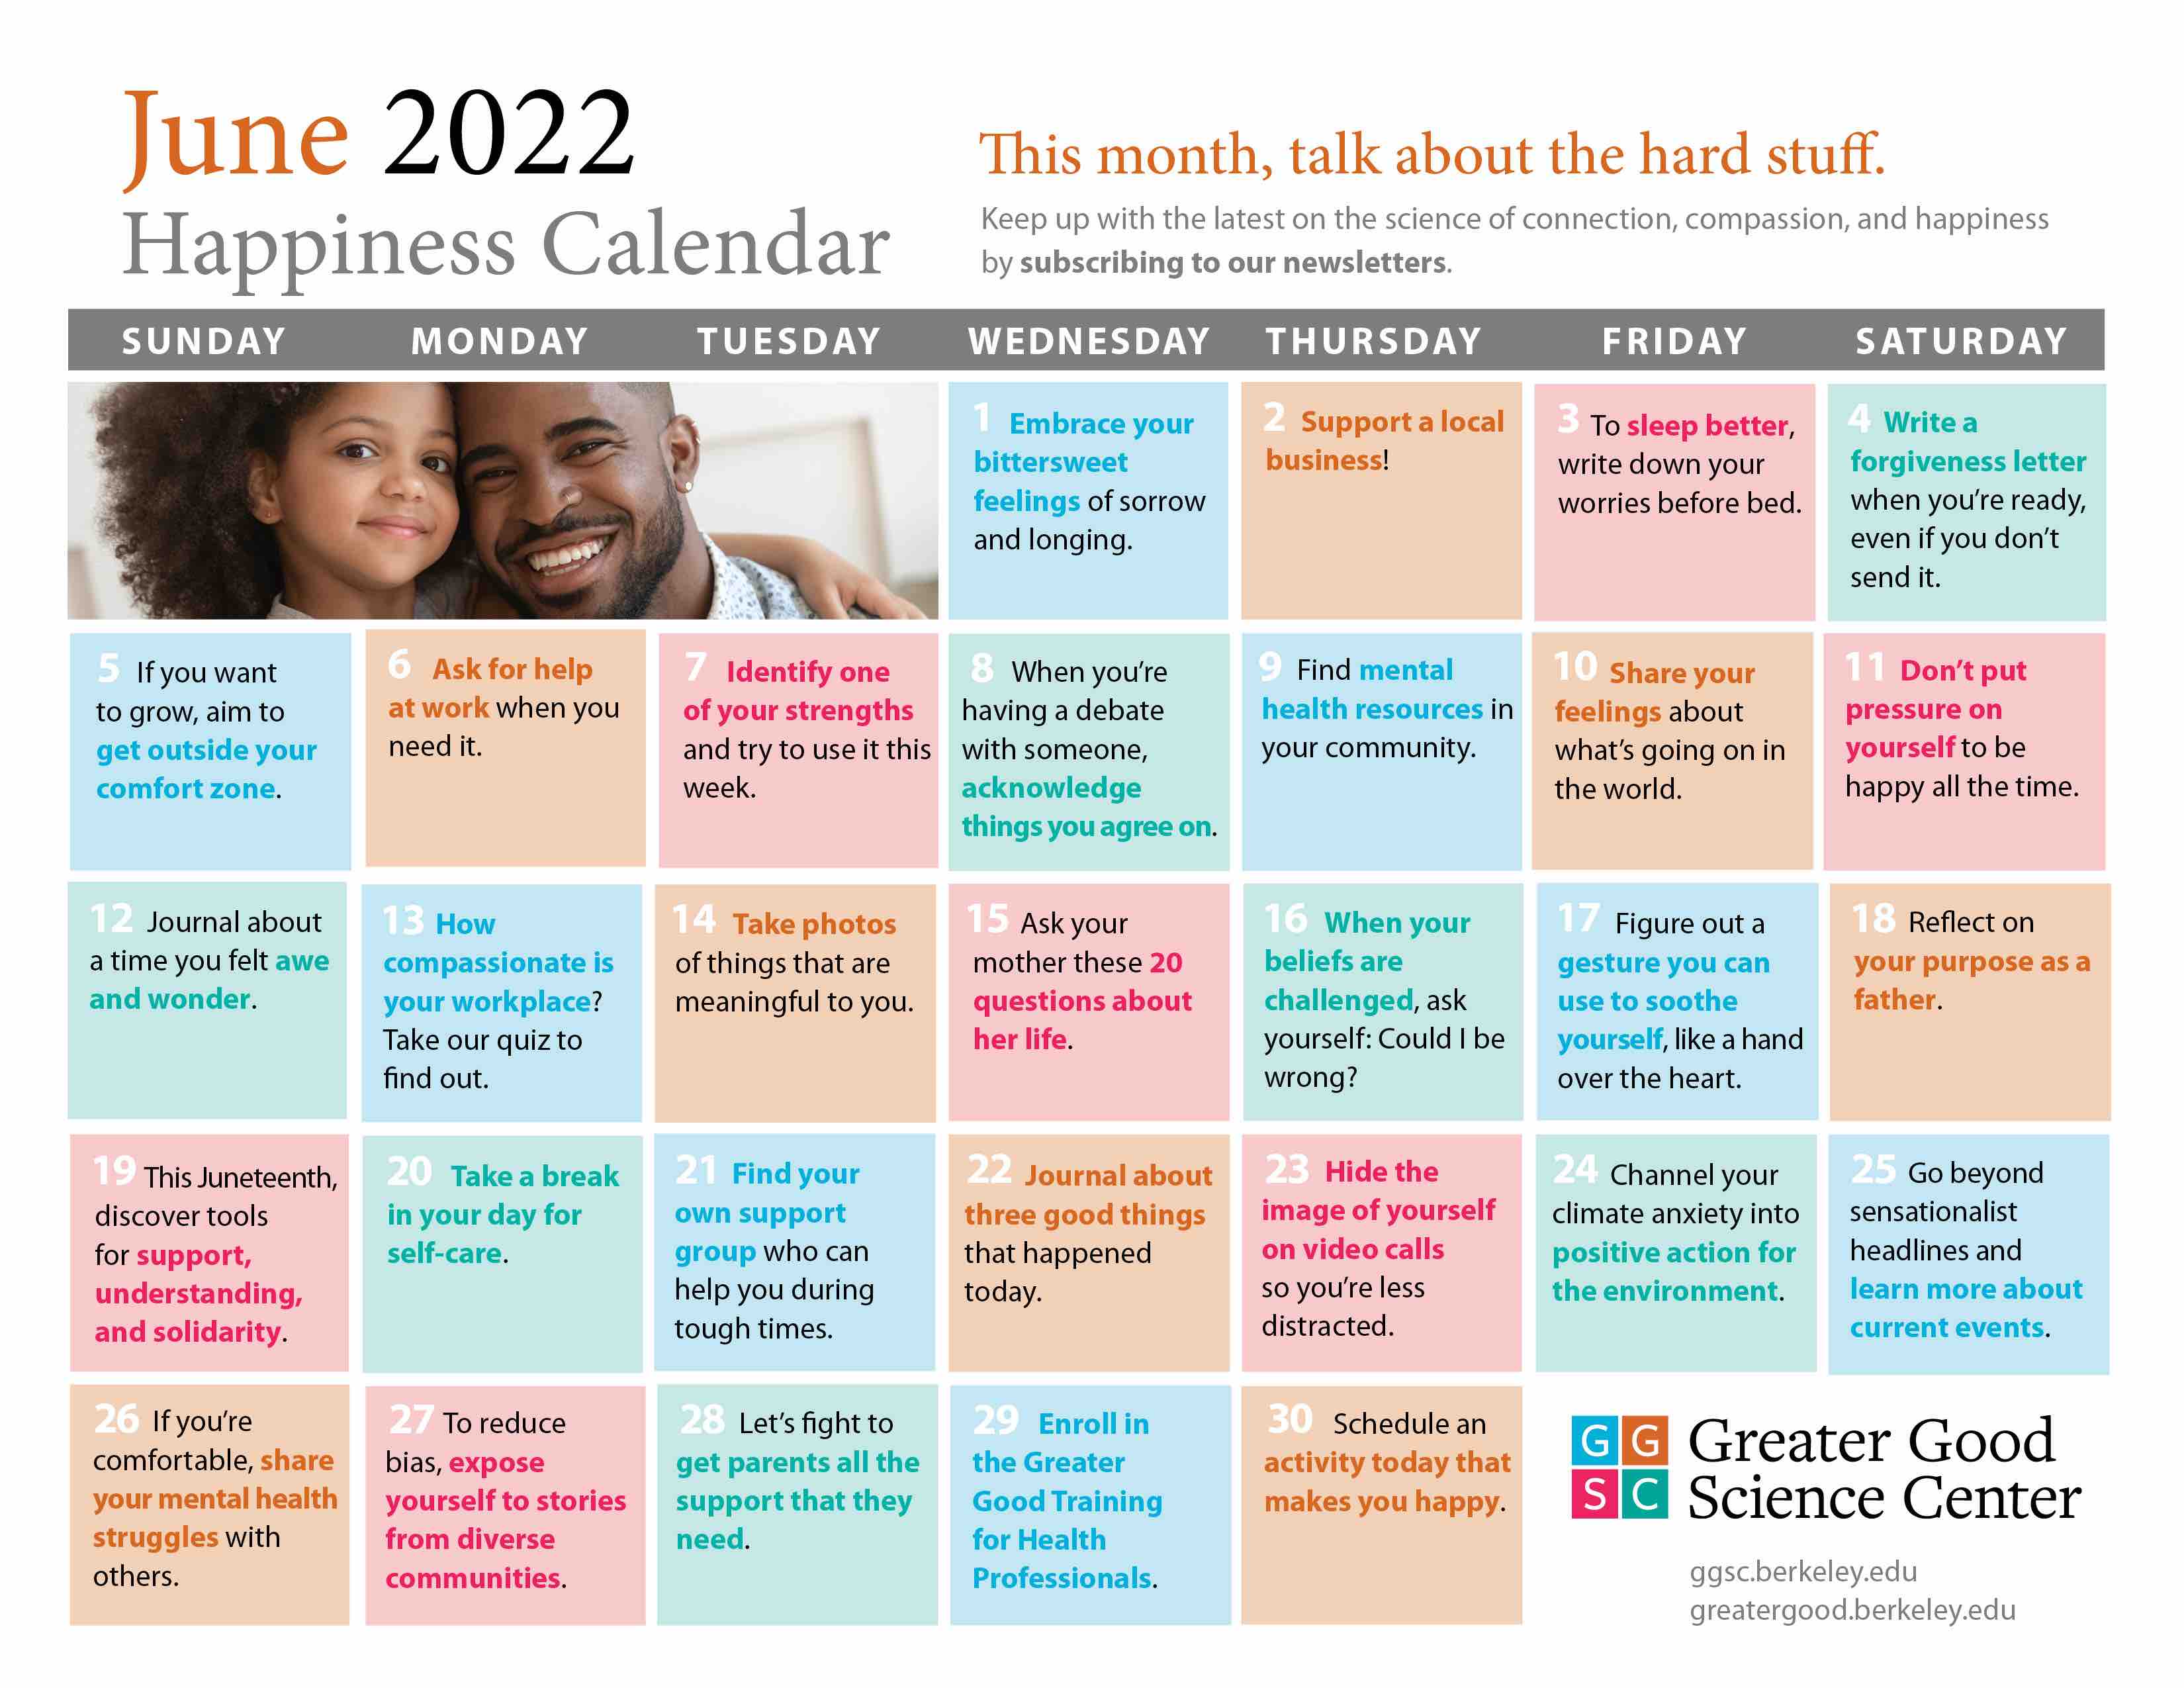 June 2022 happiness calendar